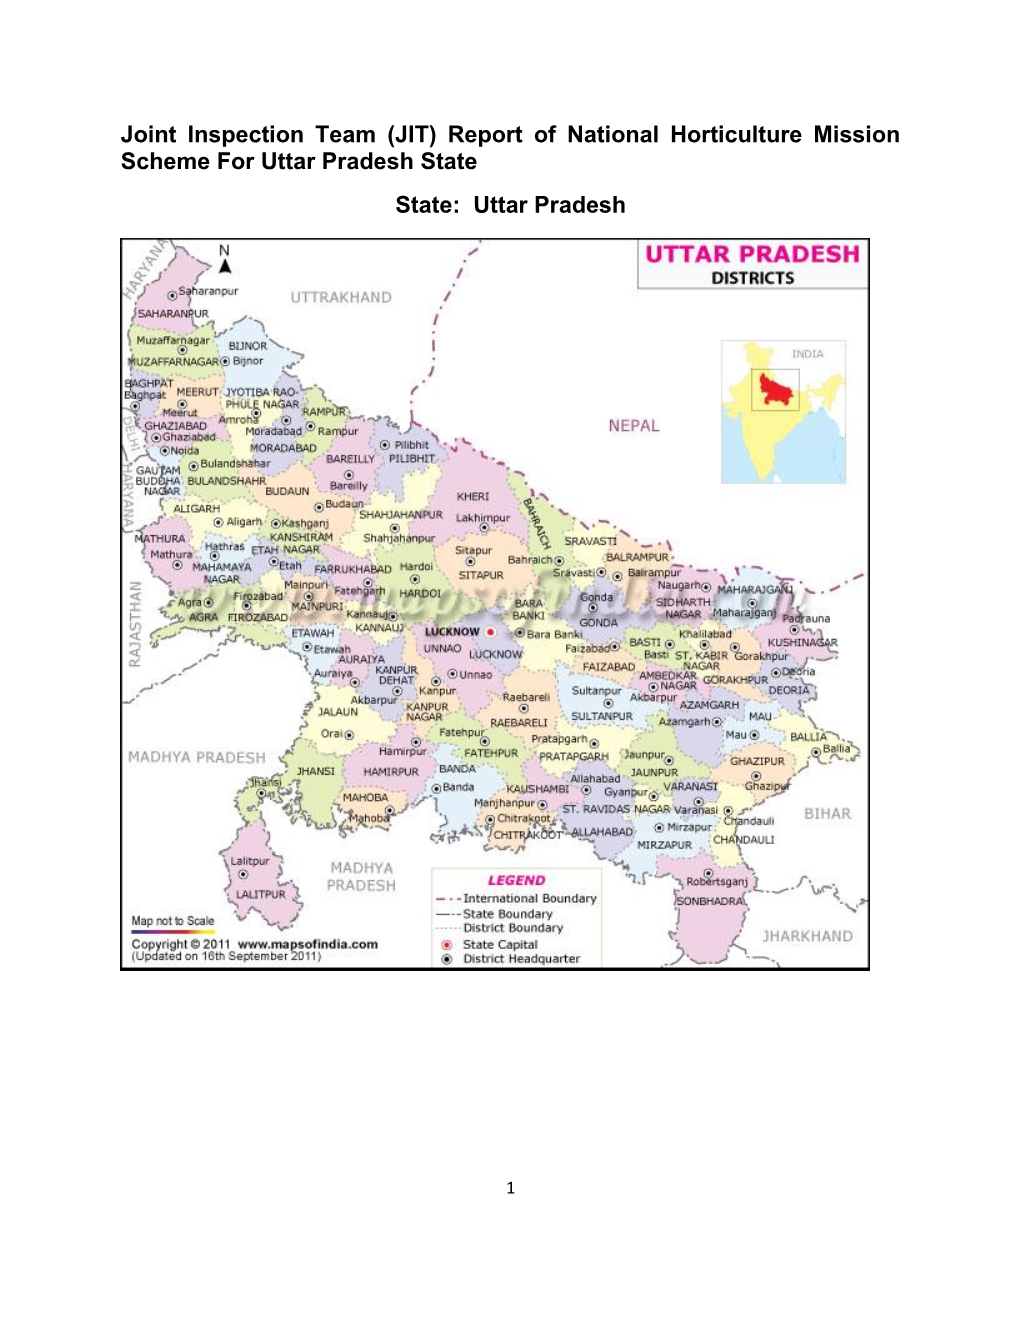 (JIT) Report of National Horticulture Mission Scheme for Uttar Pradesh State State: Uttar Pradesh